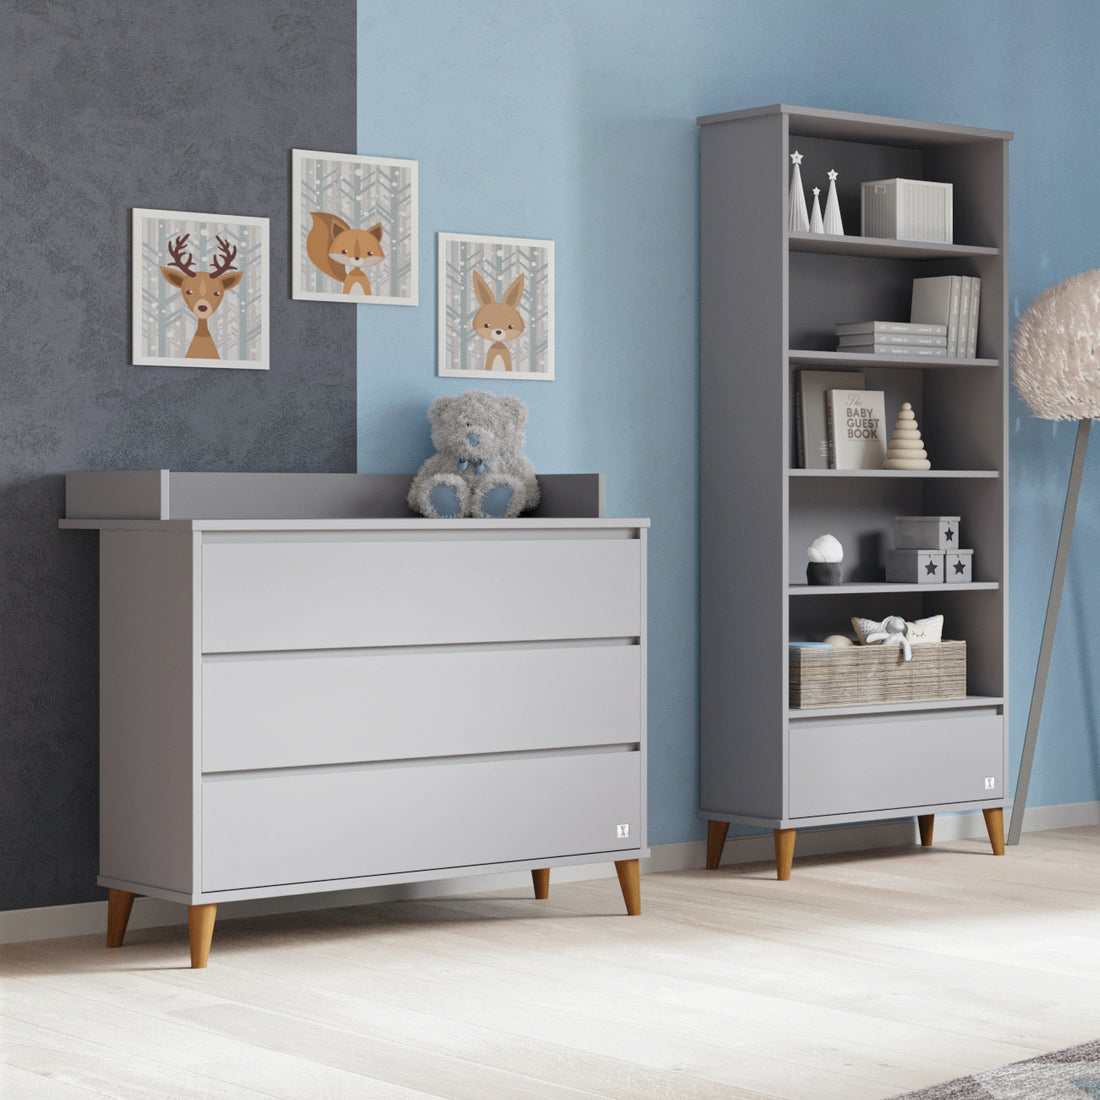 Changing table NORDIC grey | Scandinavian baby furniture | exclusive baby furniture